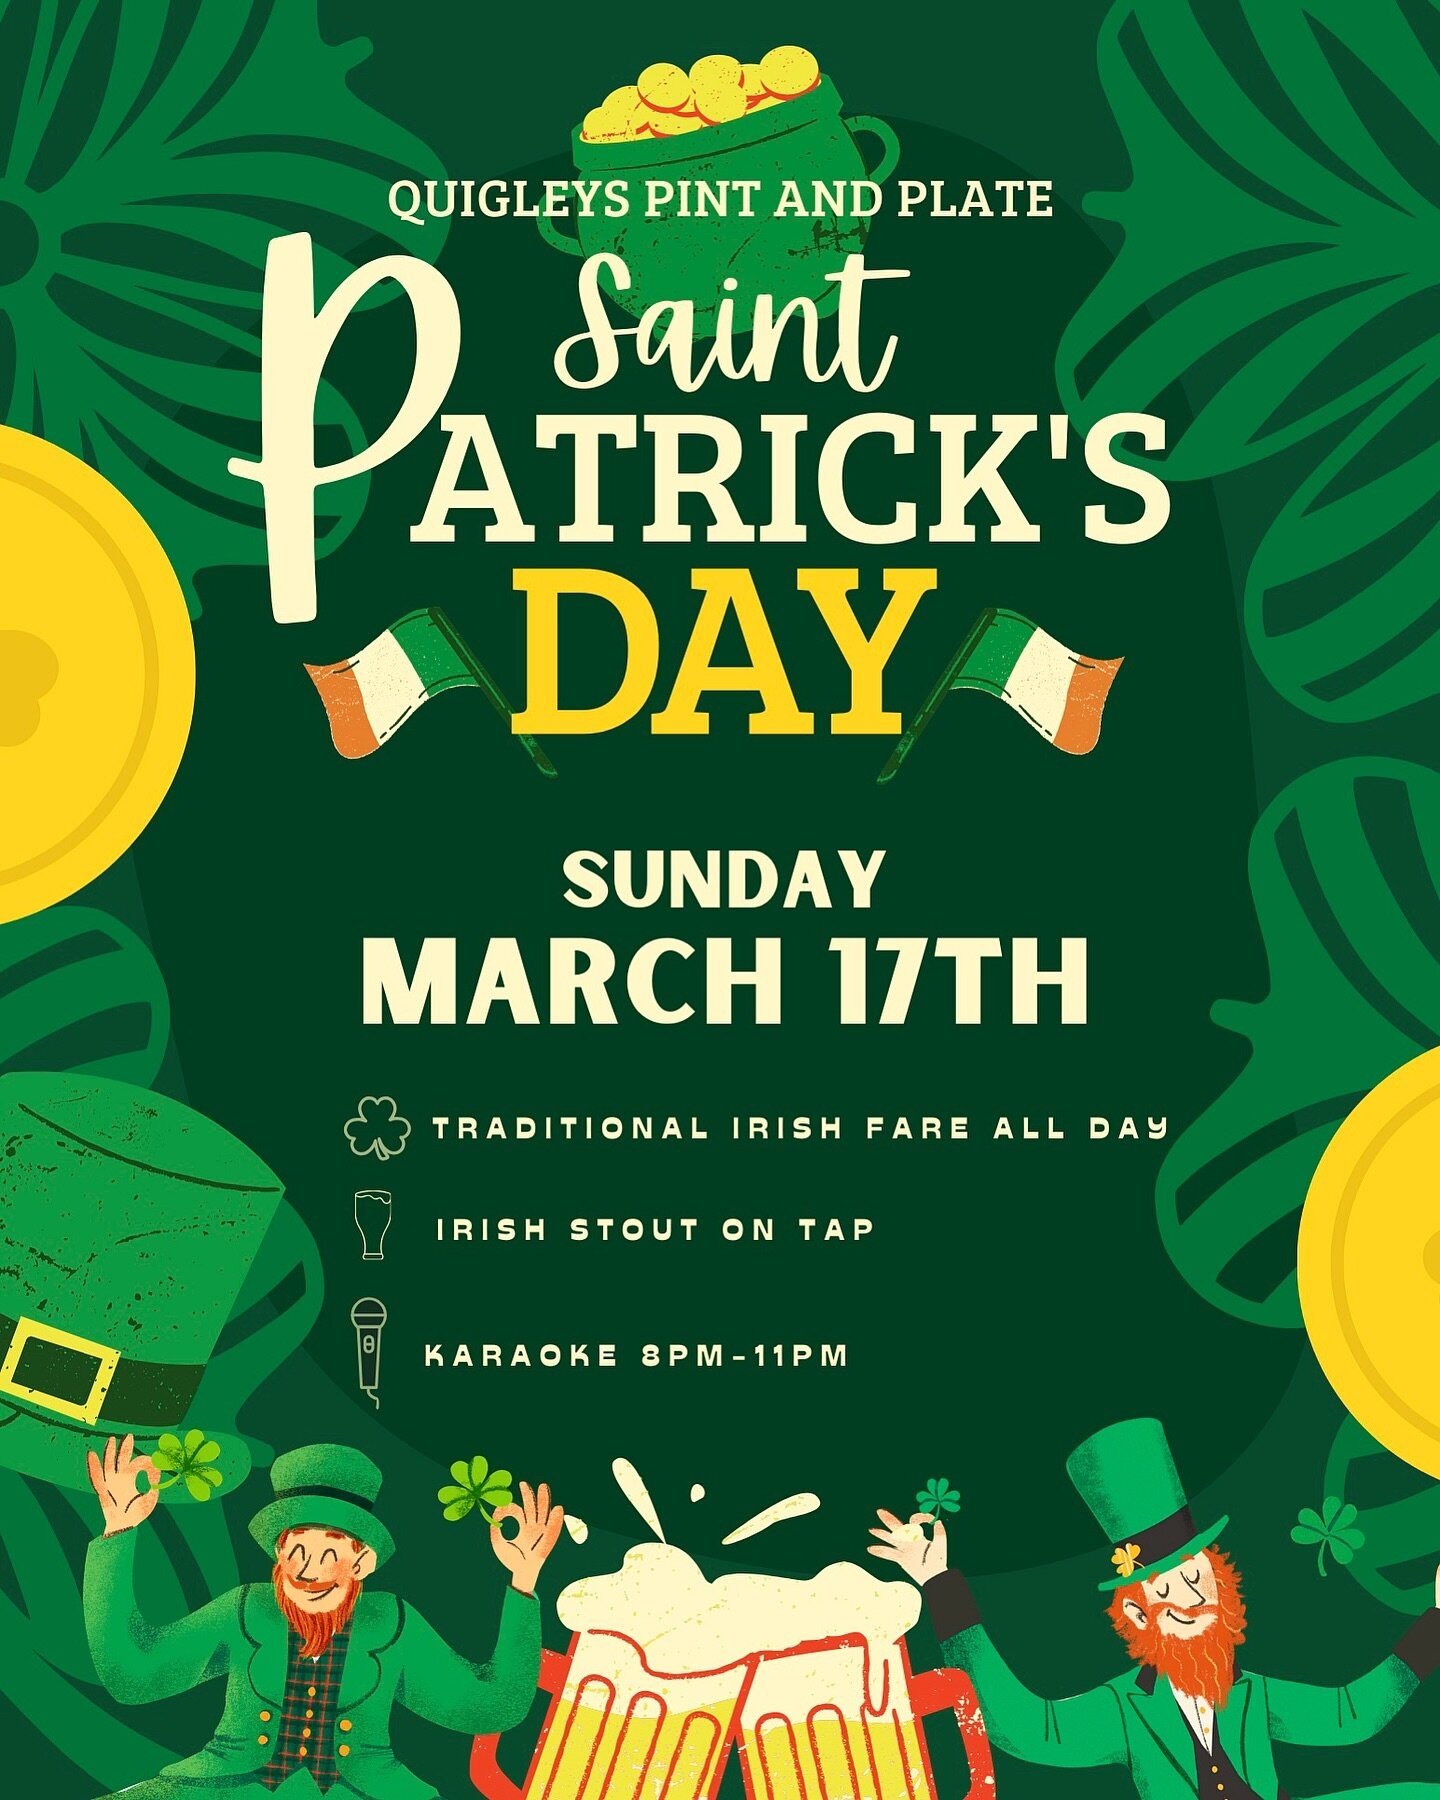 .
🍀 St. Patty&rsquo;s Day Celebration 

🍀 Irish Fare All Day &amp; Irish Stout on Tap 

🍀 Karaoke 8:00pm-11:00pm

🍀 $13 Pitchers of Beer all day!! 

#stpatricksday #stpattysday #irishstout #stout #quigleyspintandplate #quigleys